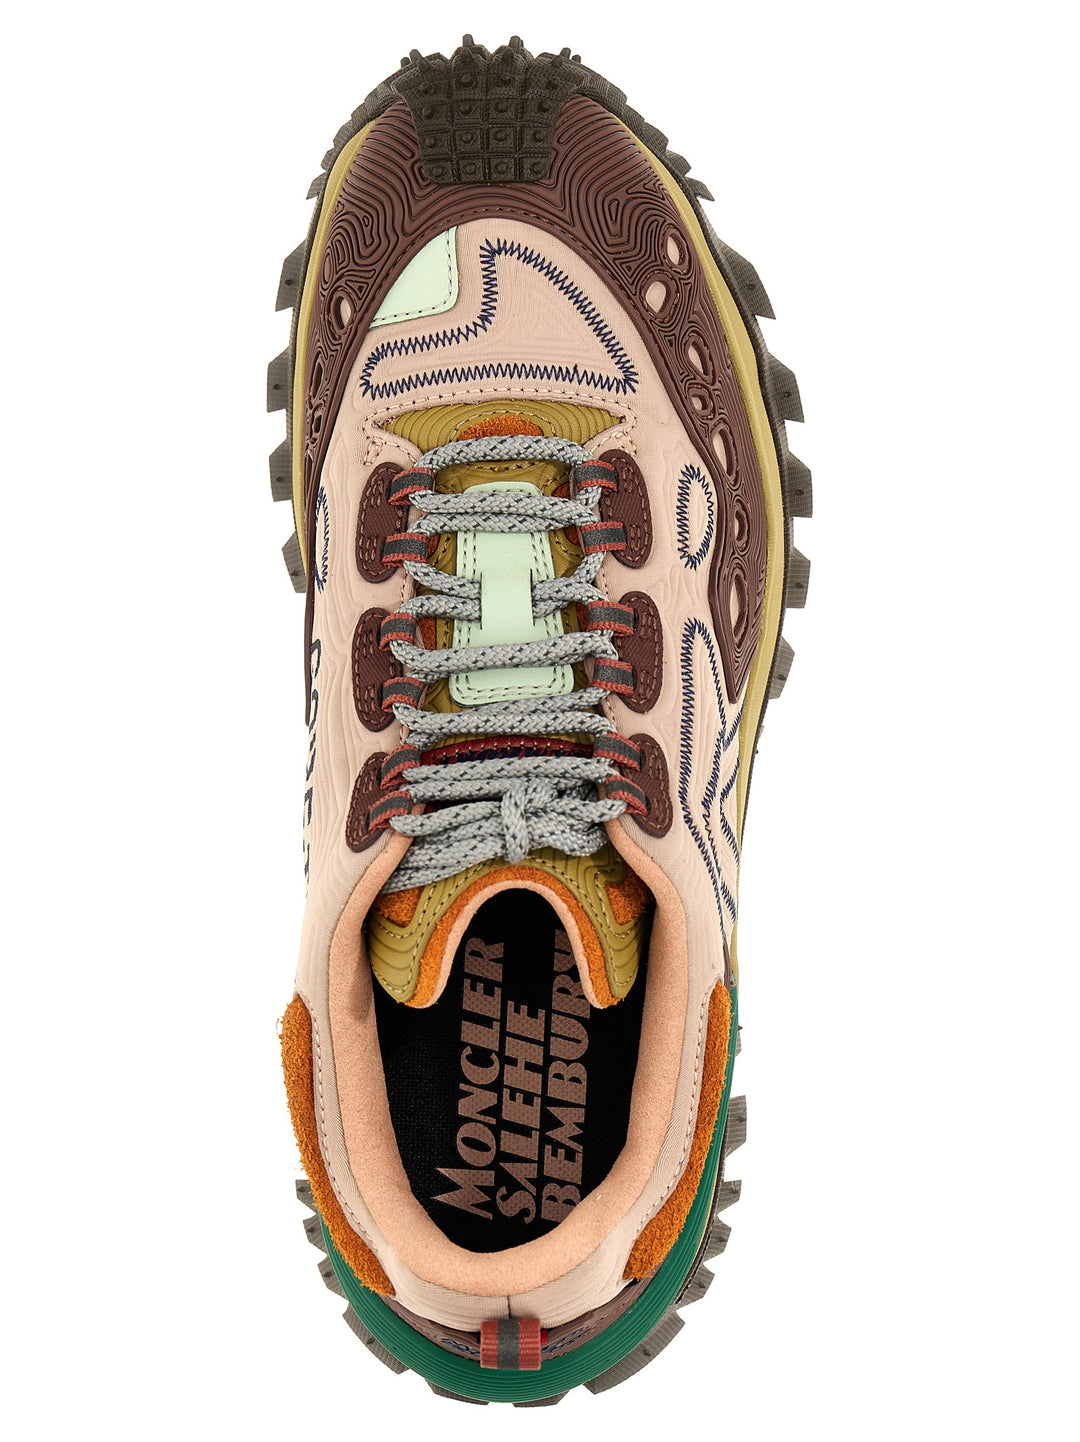 Trailigrip Sneakers Multicolor